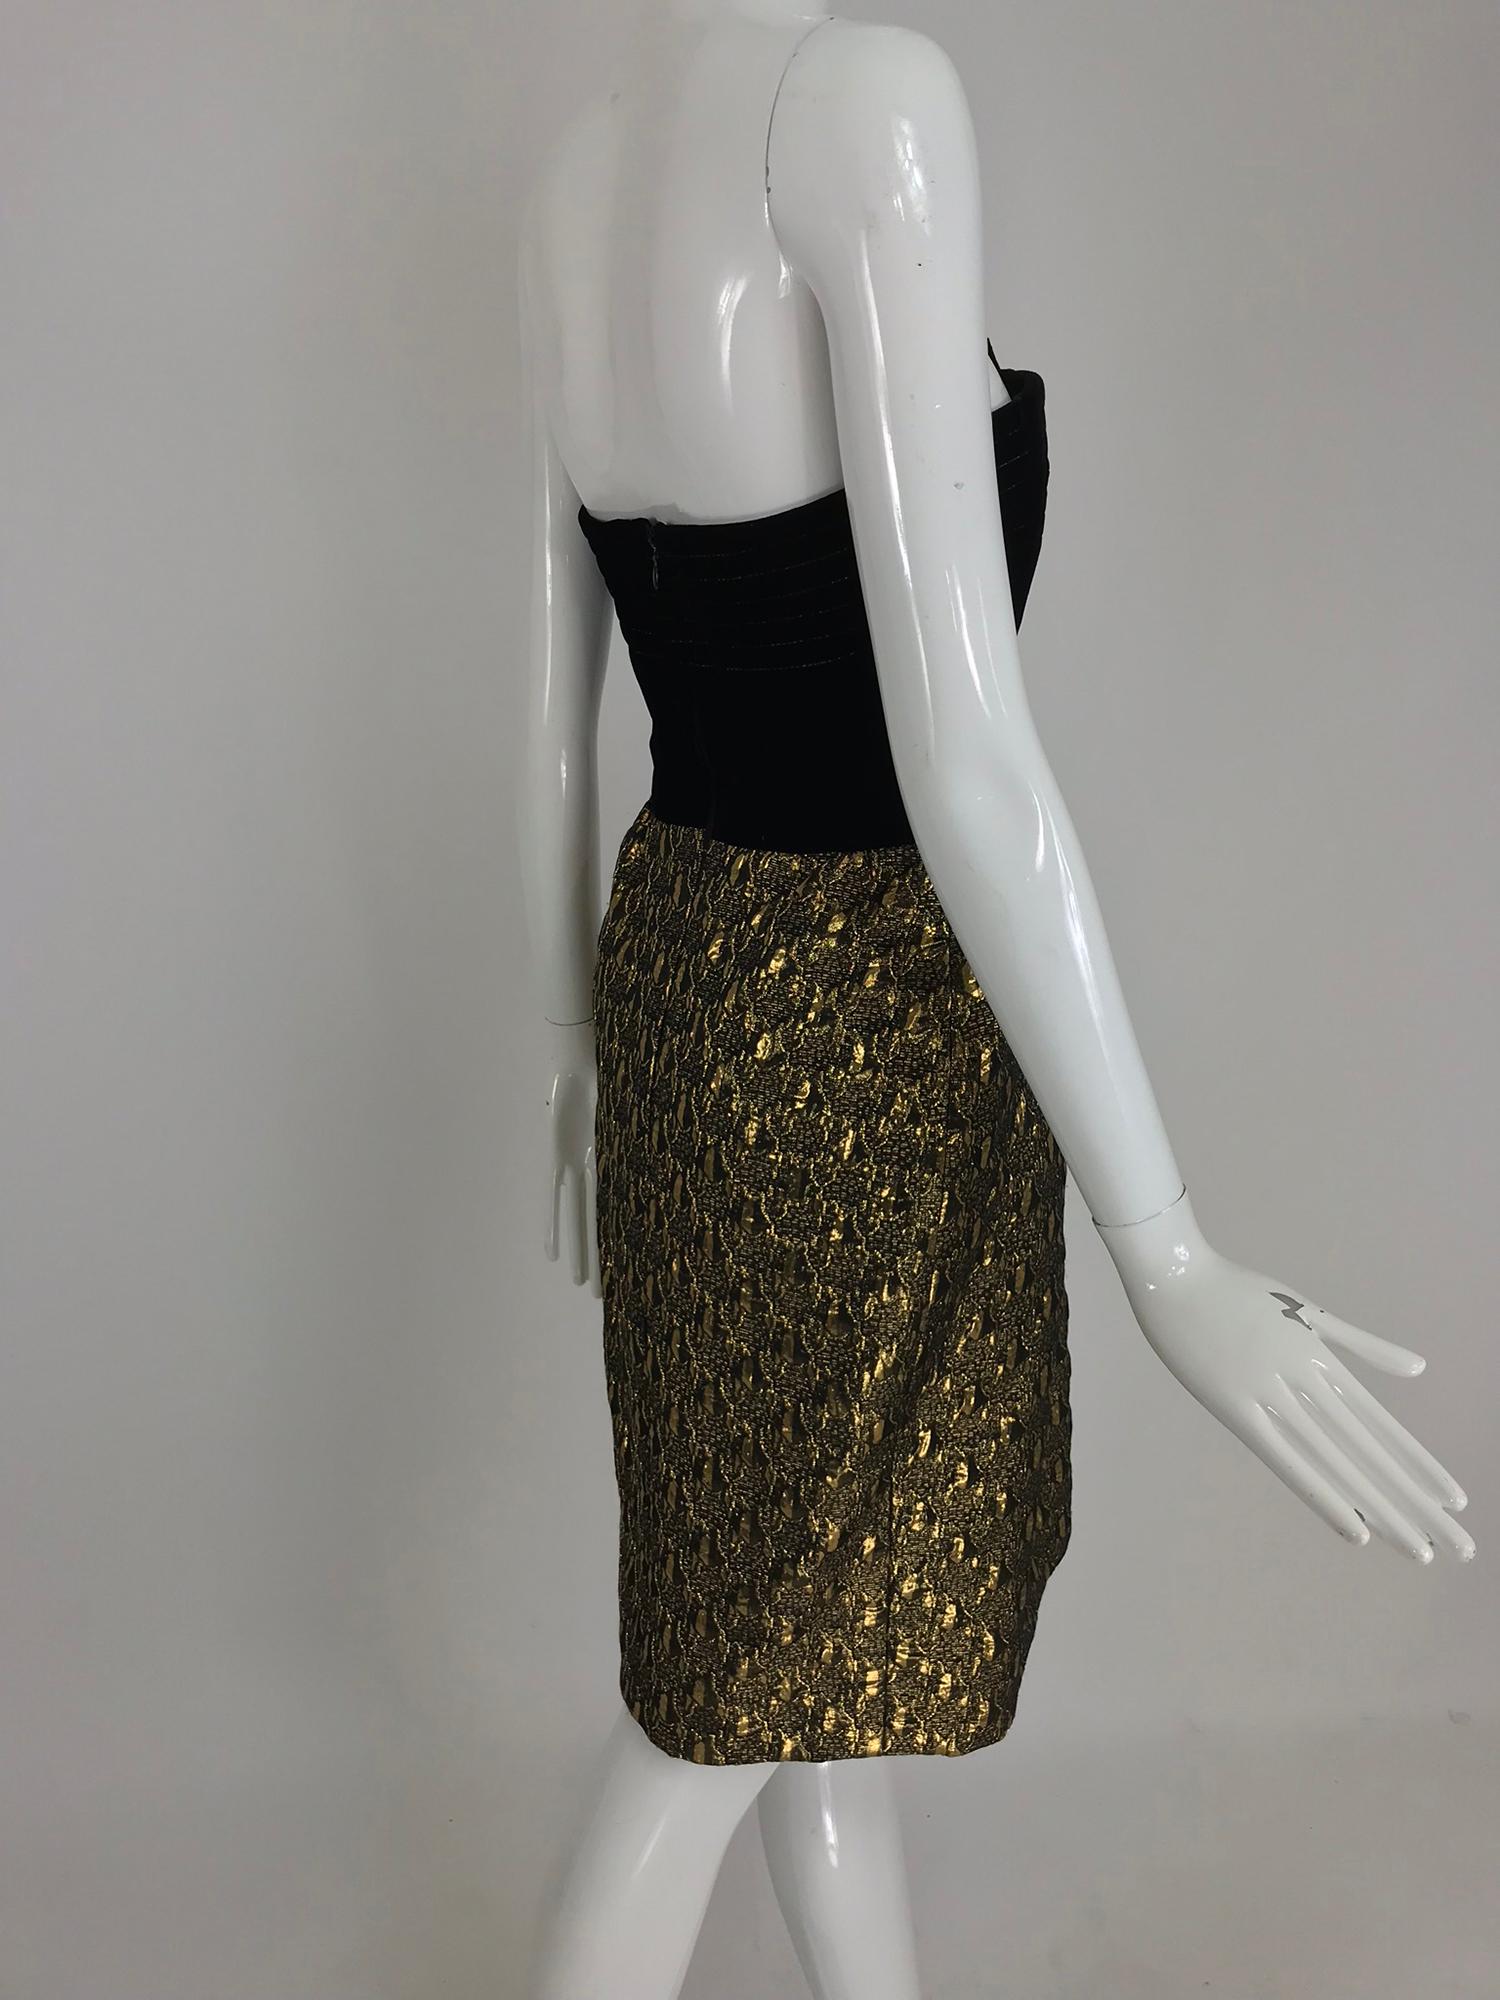 Jacqueline de Ribes gold metallic and black velvet strapless cocktail dress  4